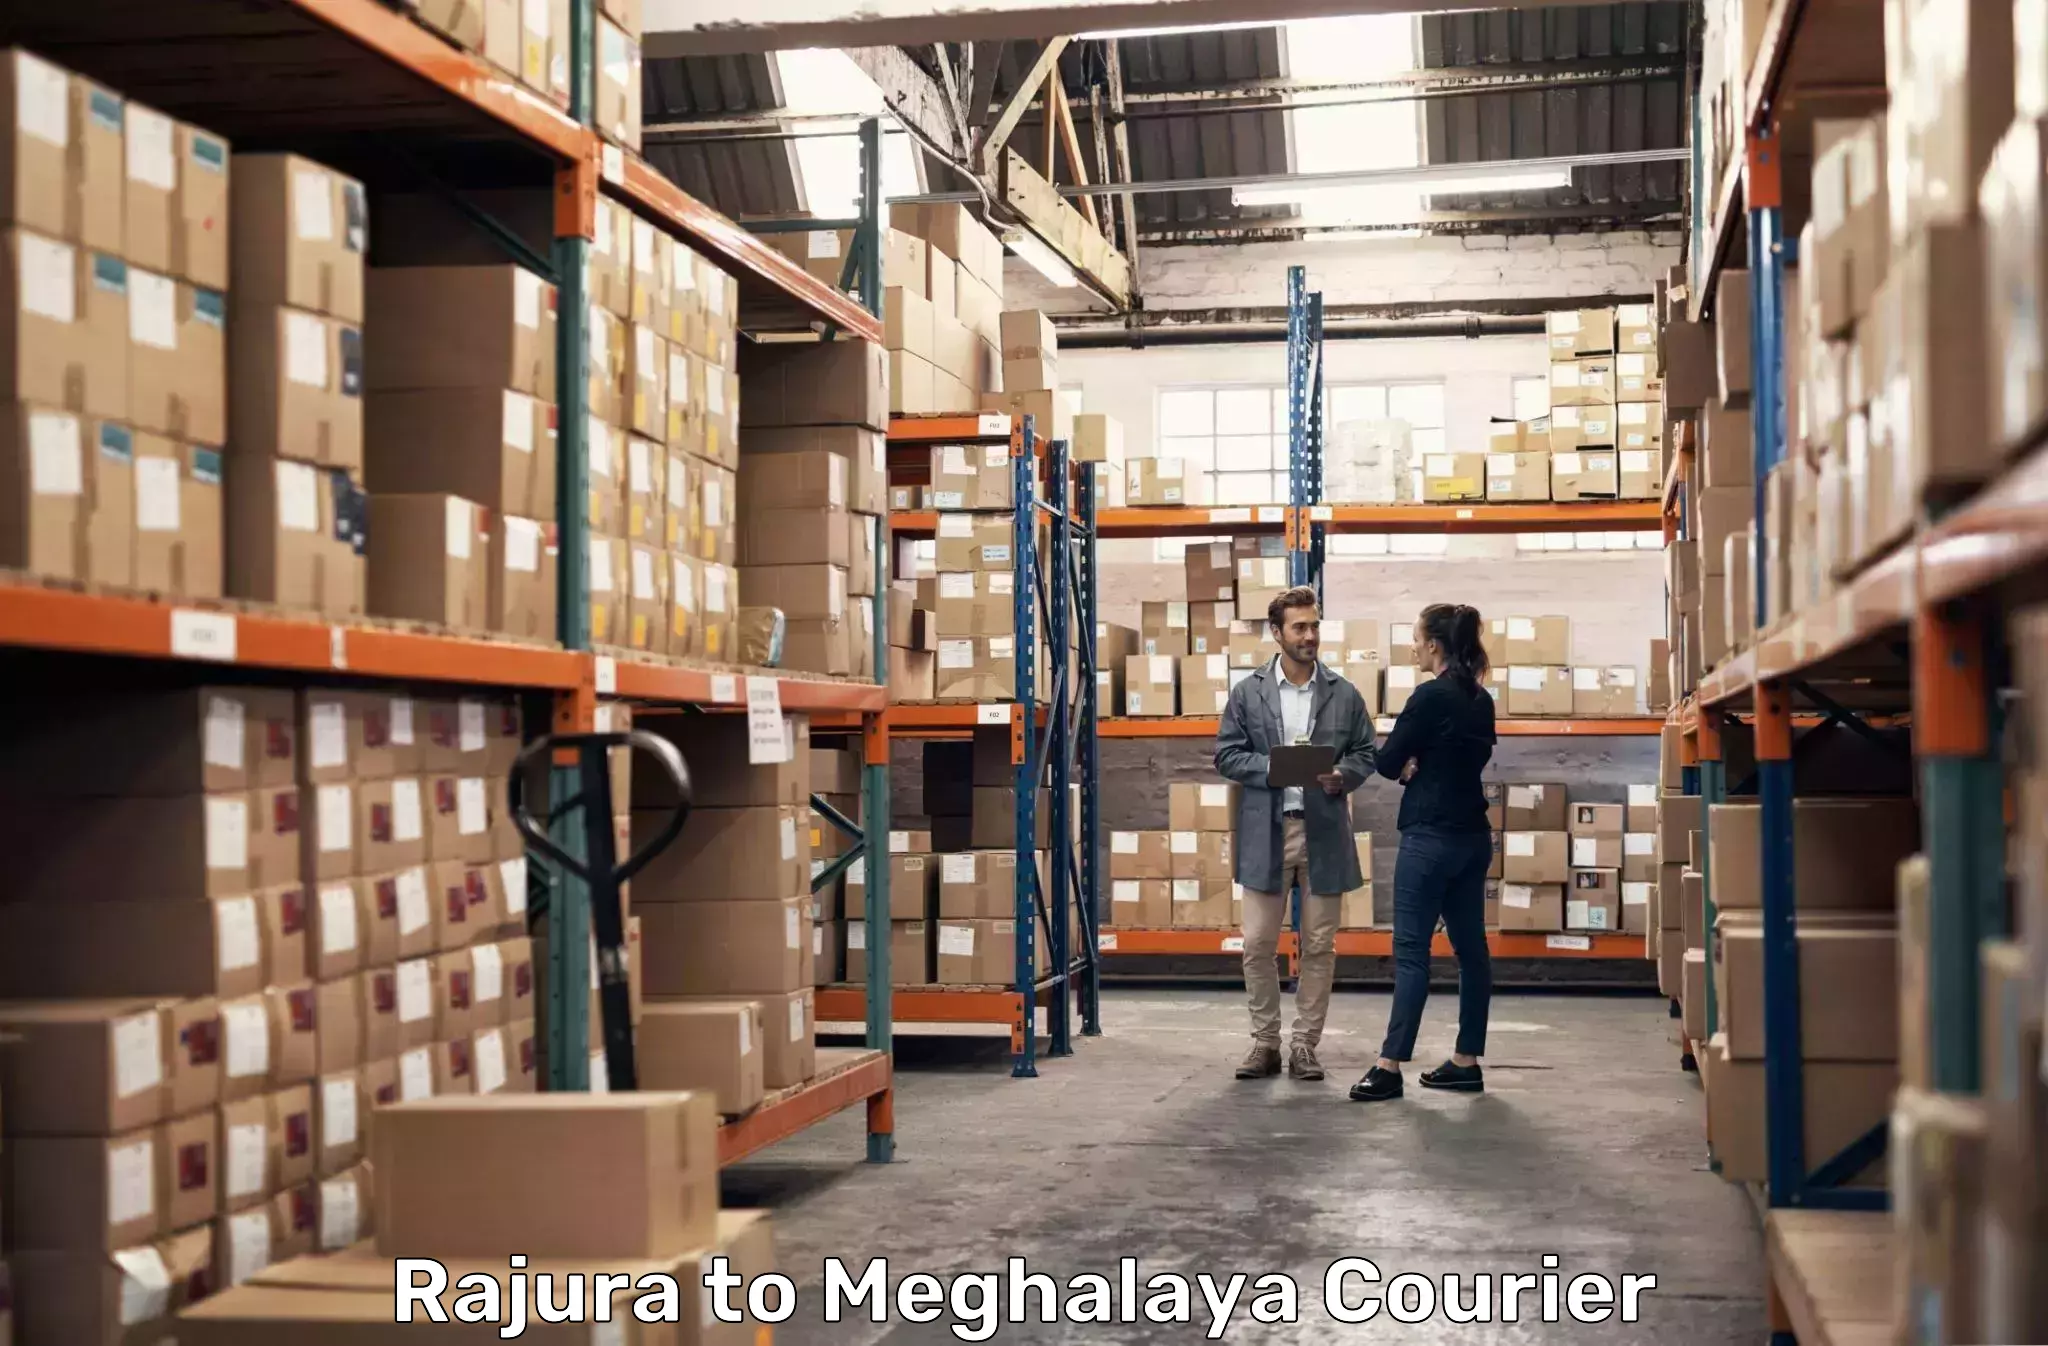 Express delivery capabilities Rajura to Meghalaya